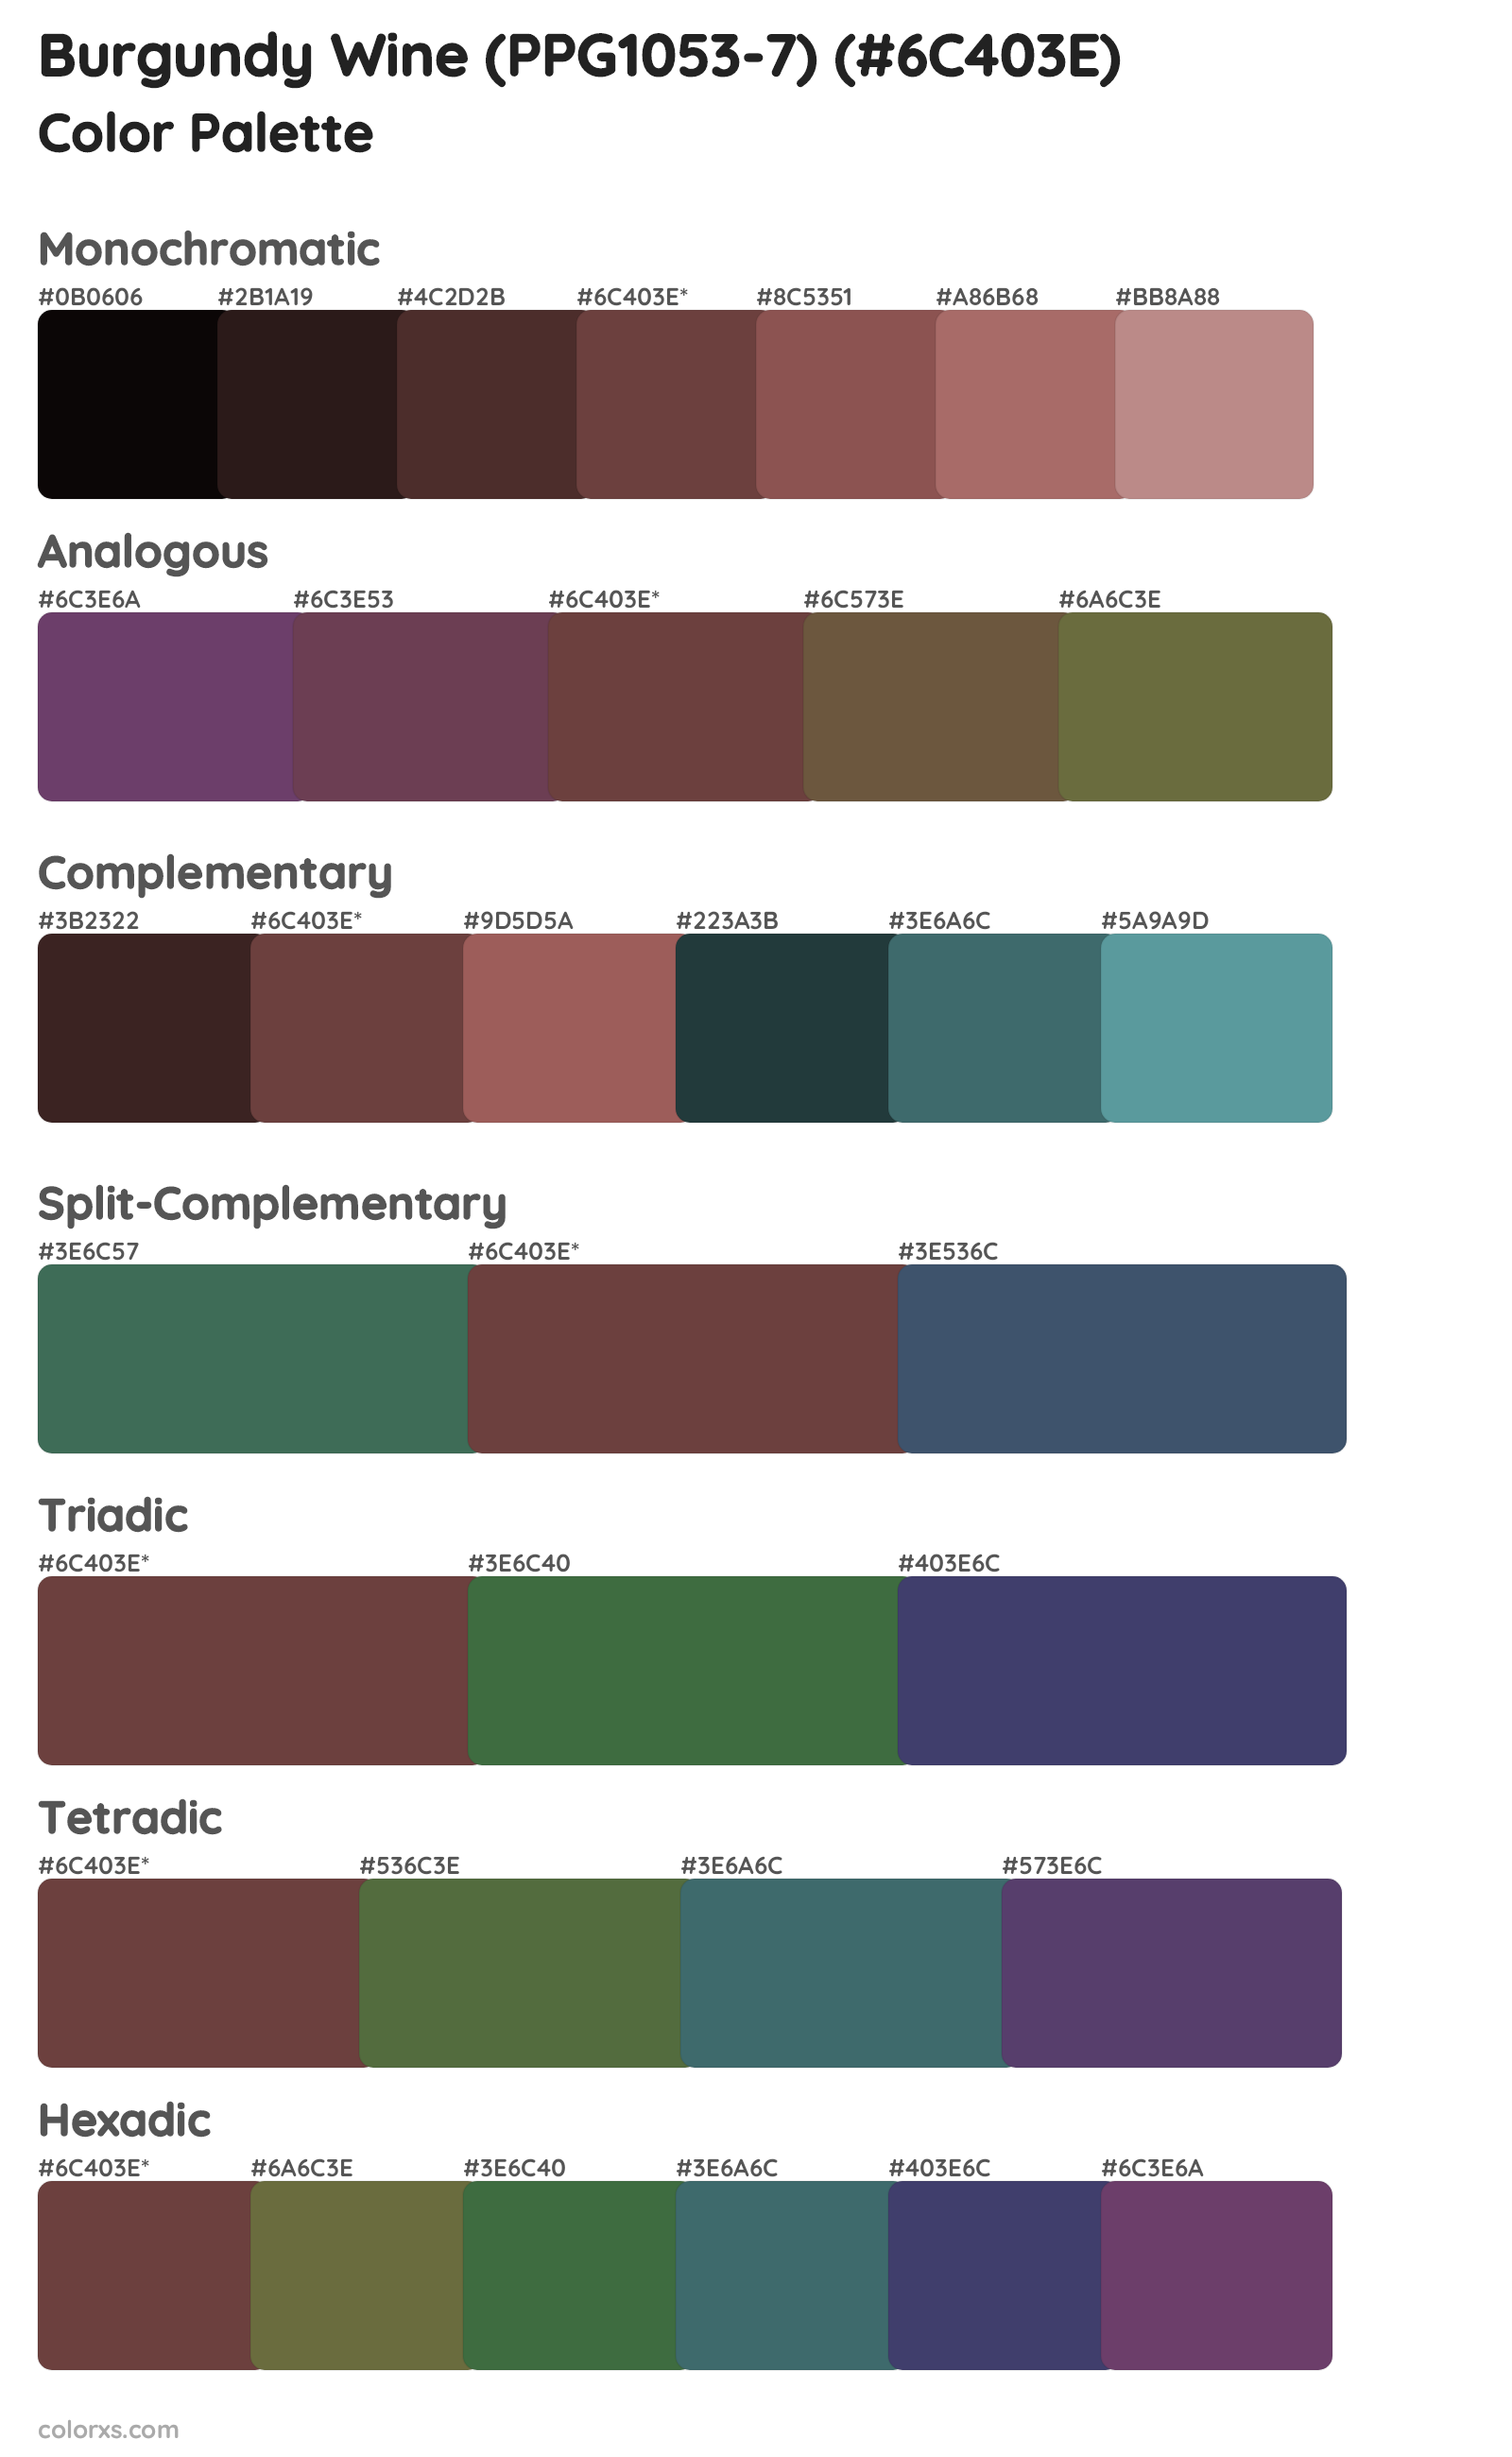 Burgundy Wine (PPG1053-7) Color Scheme Palettes